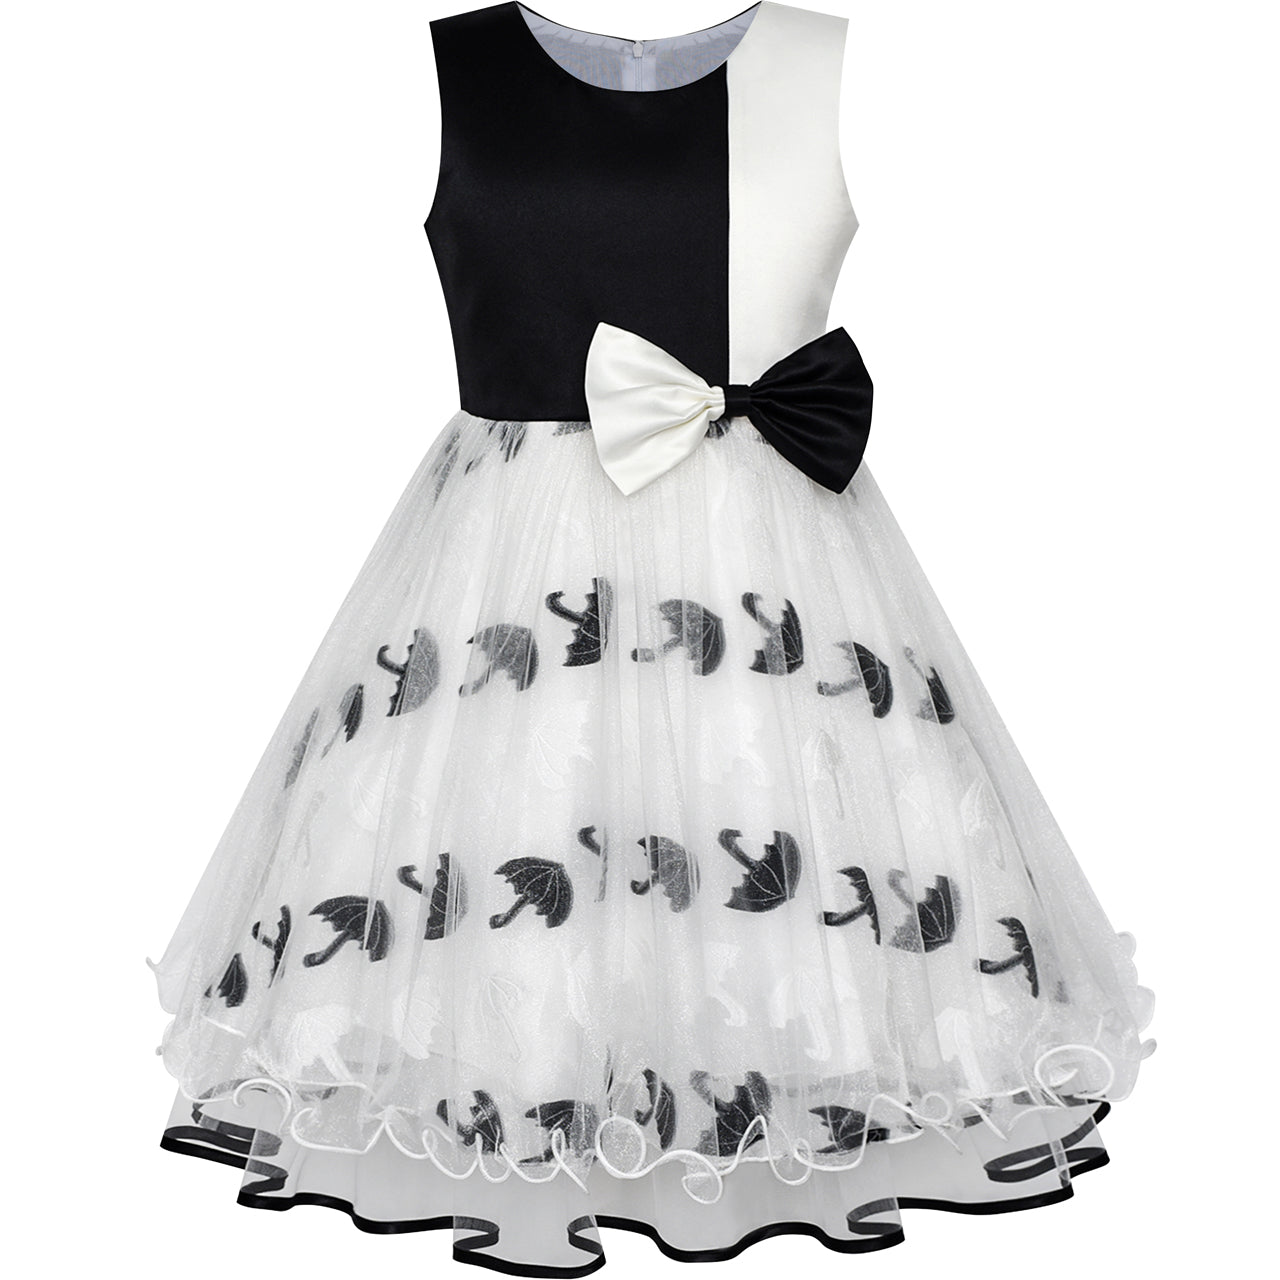 black white dress designs